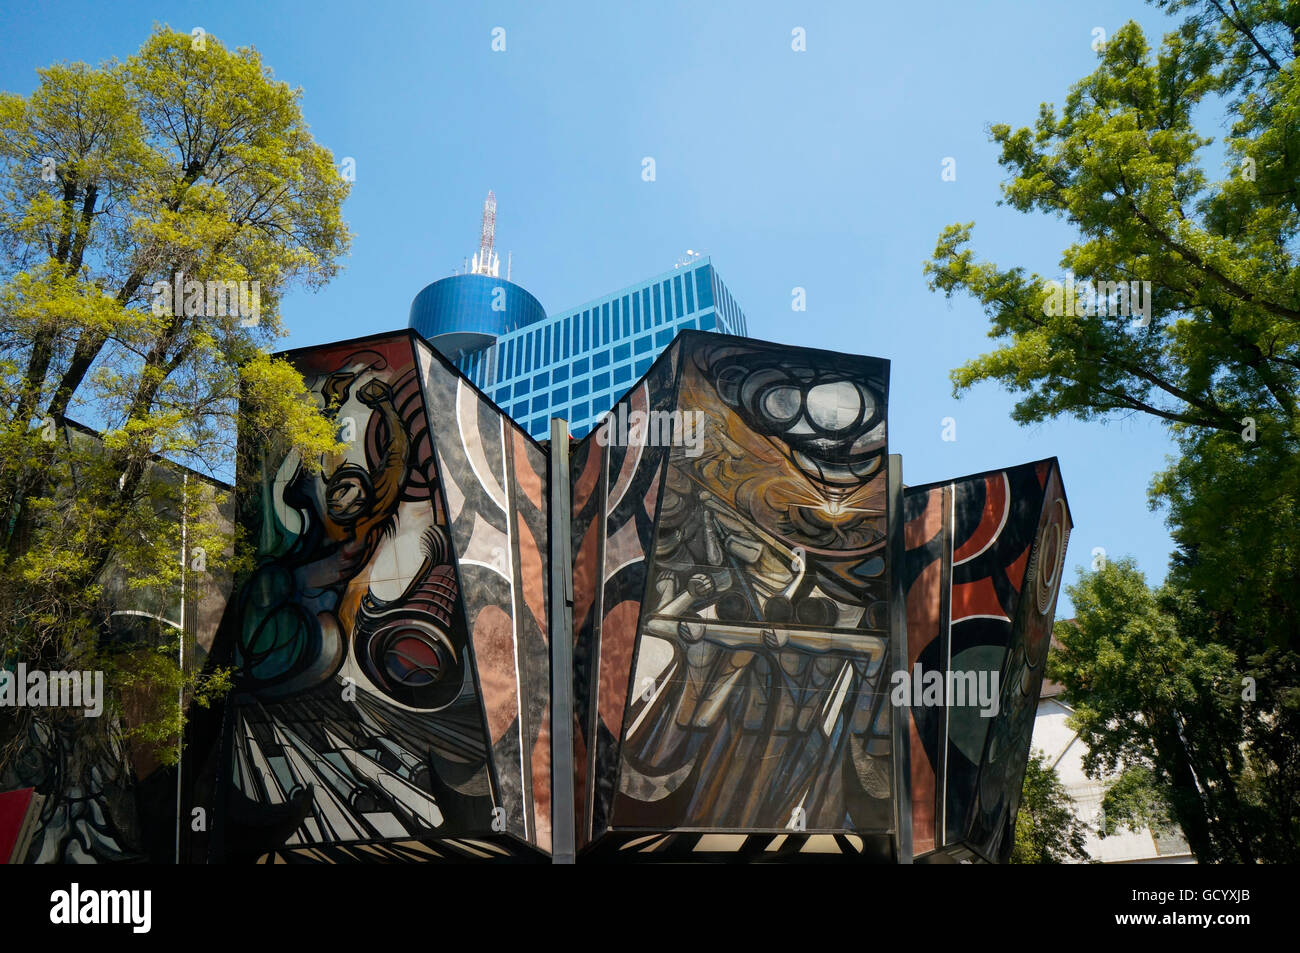 Polyforum Siqueiros building murals in Mexico City, Mexico. Giant mural by David Alfaro Siqueiros. “La historia de la humanidad” Stock Photo